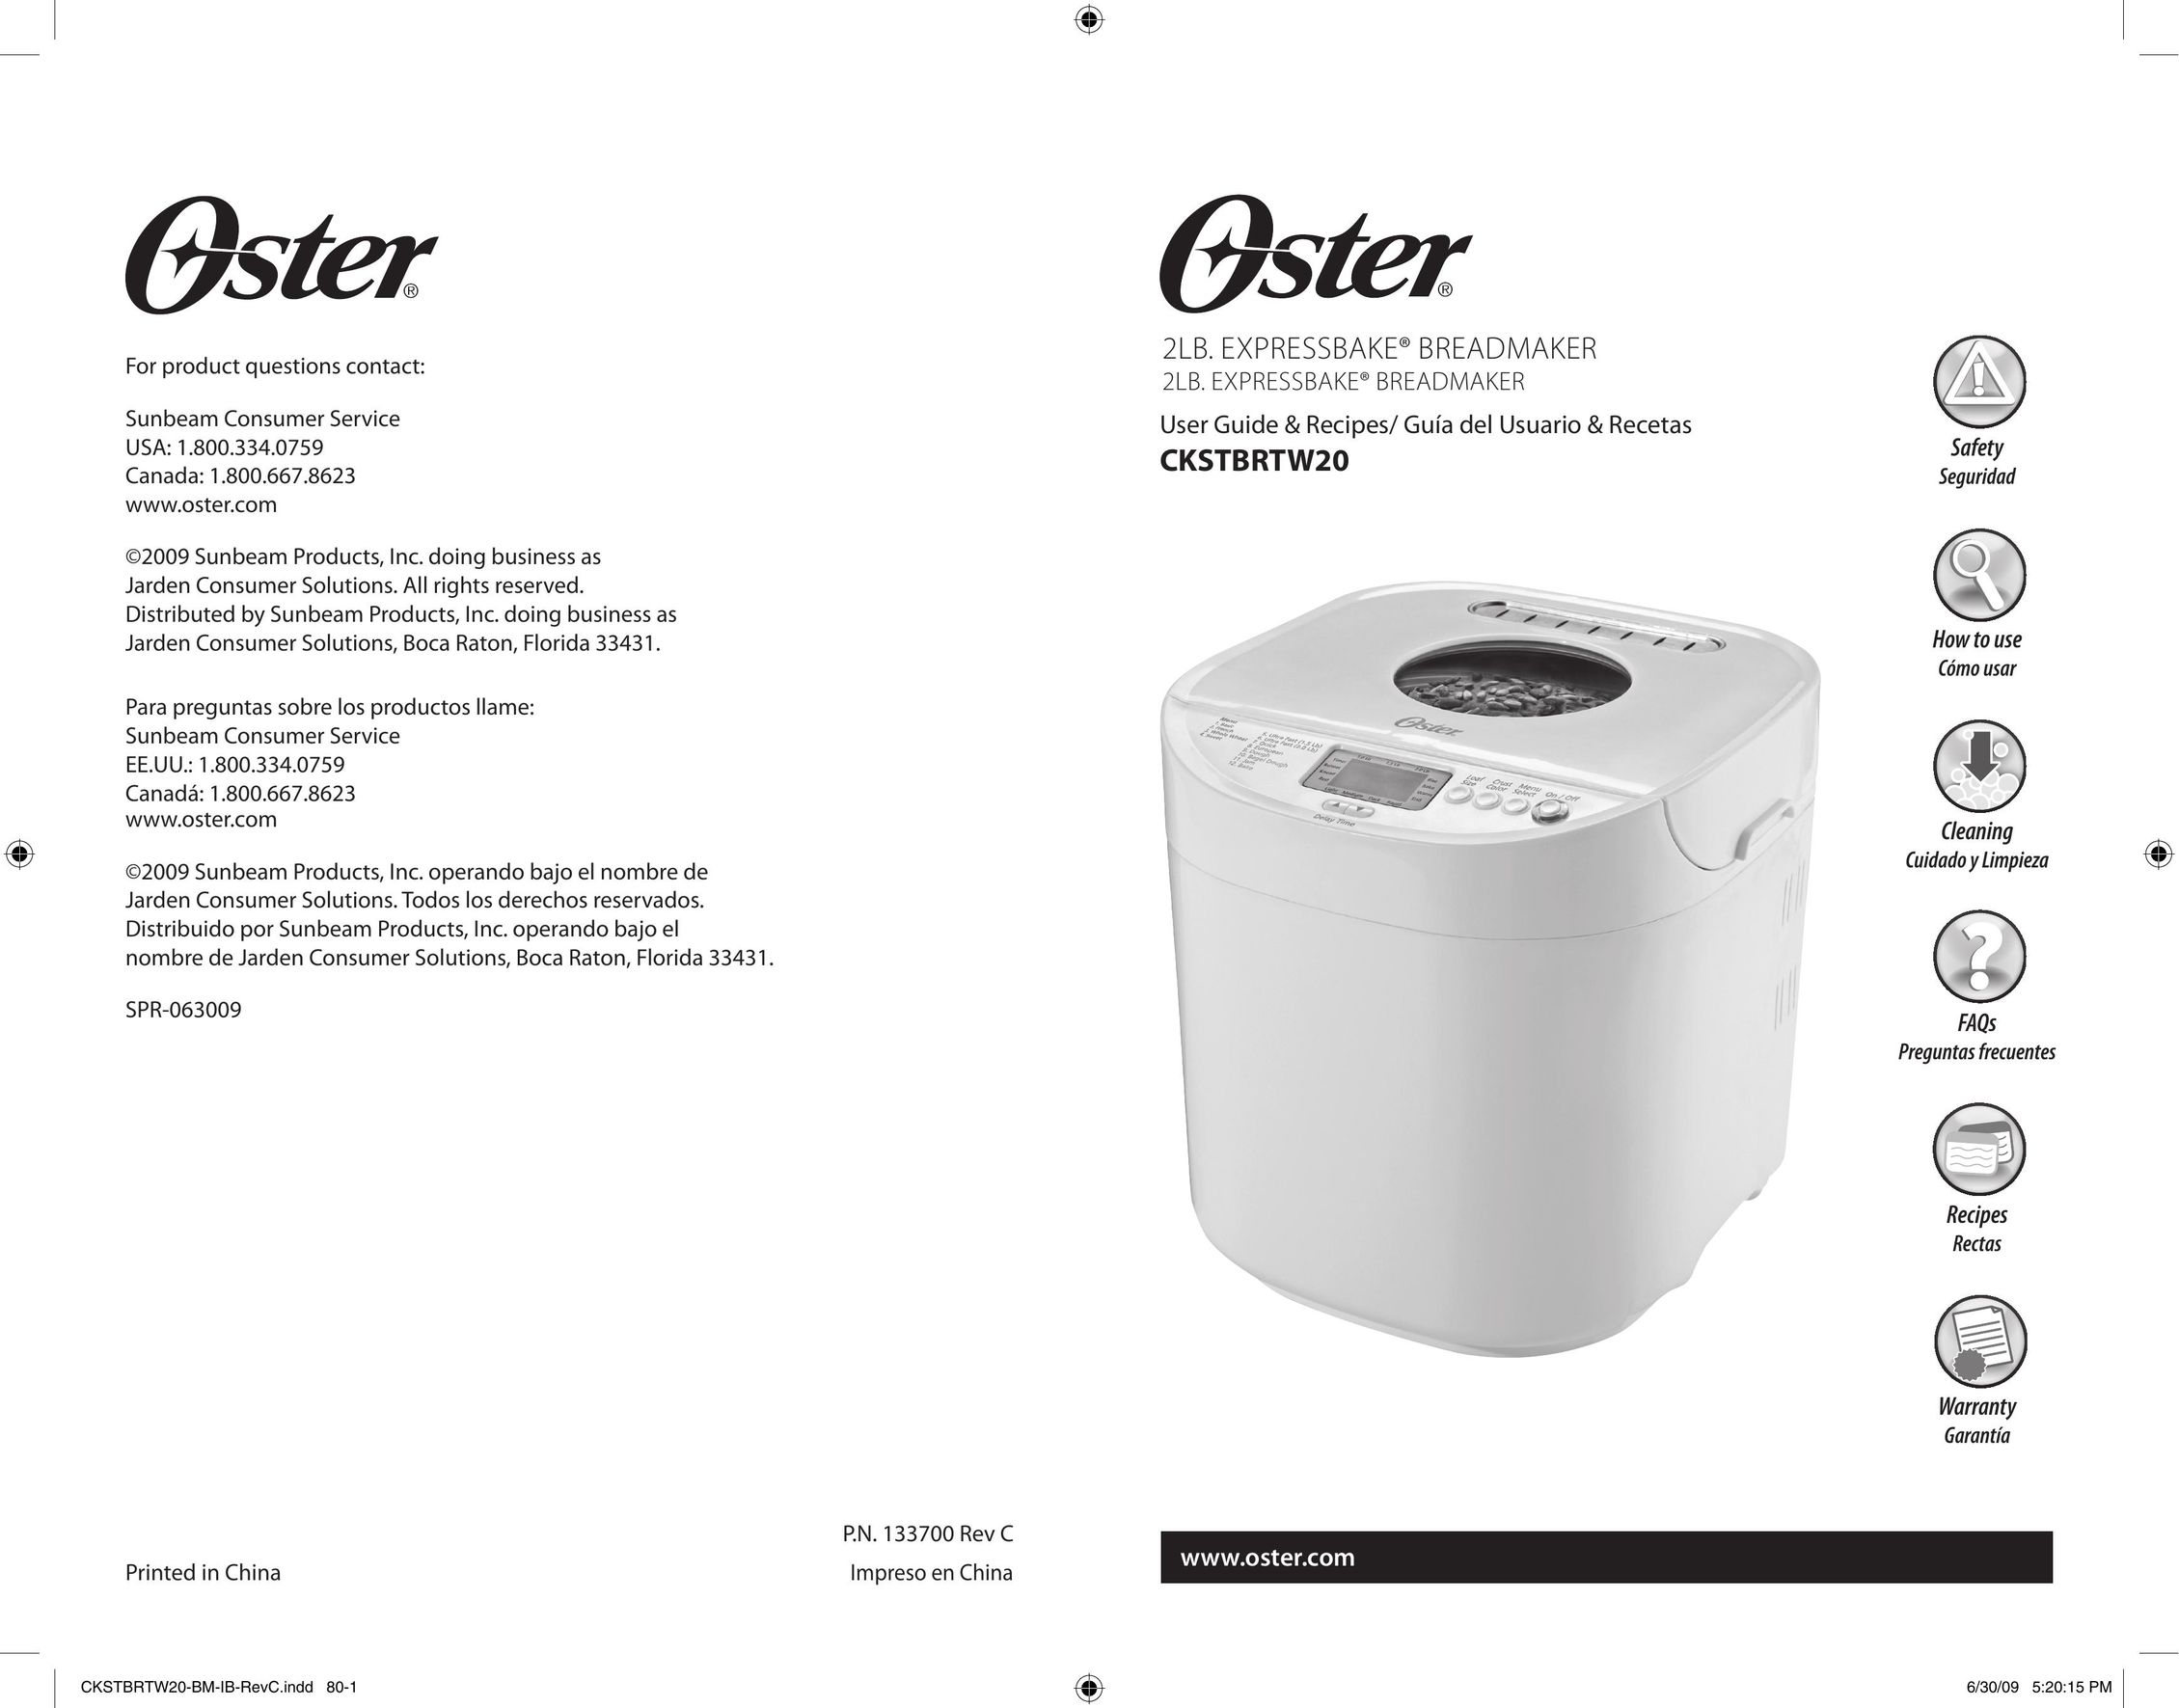 Oster Oster 2lb. Expressbake Breadmaker Bread Maker User Manual